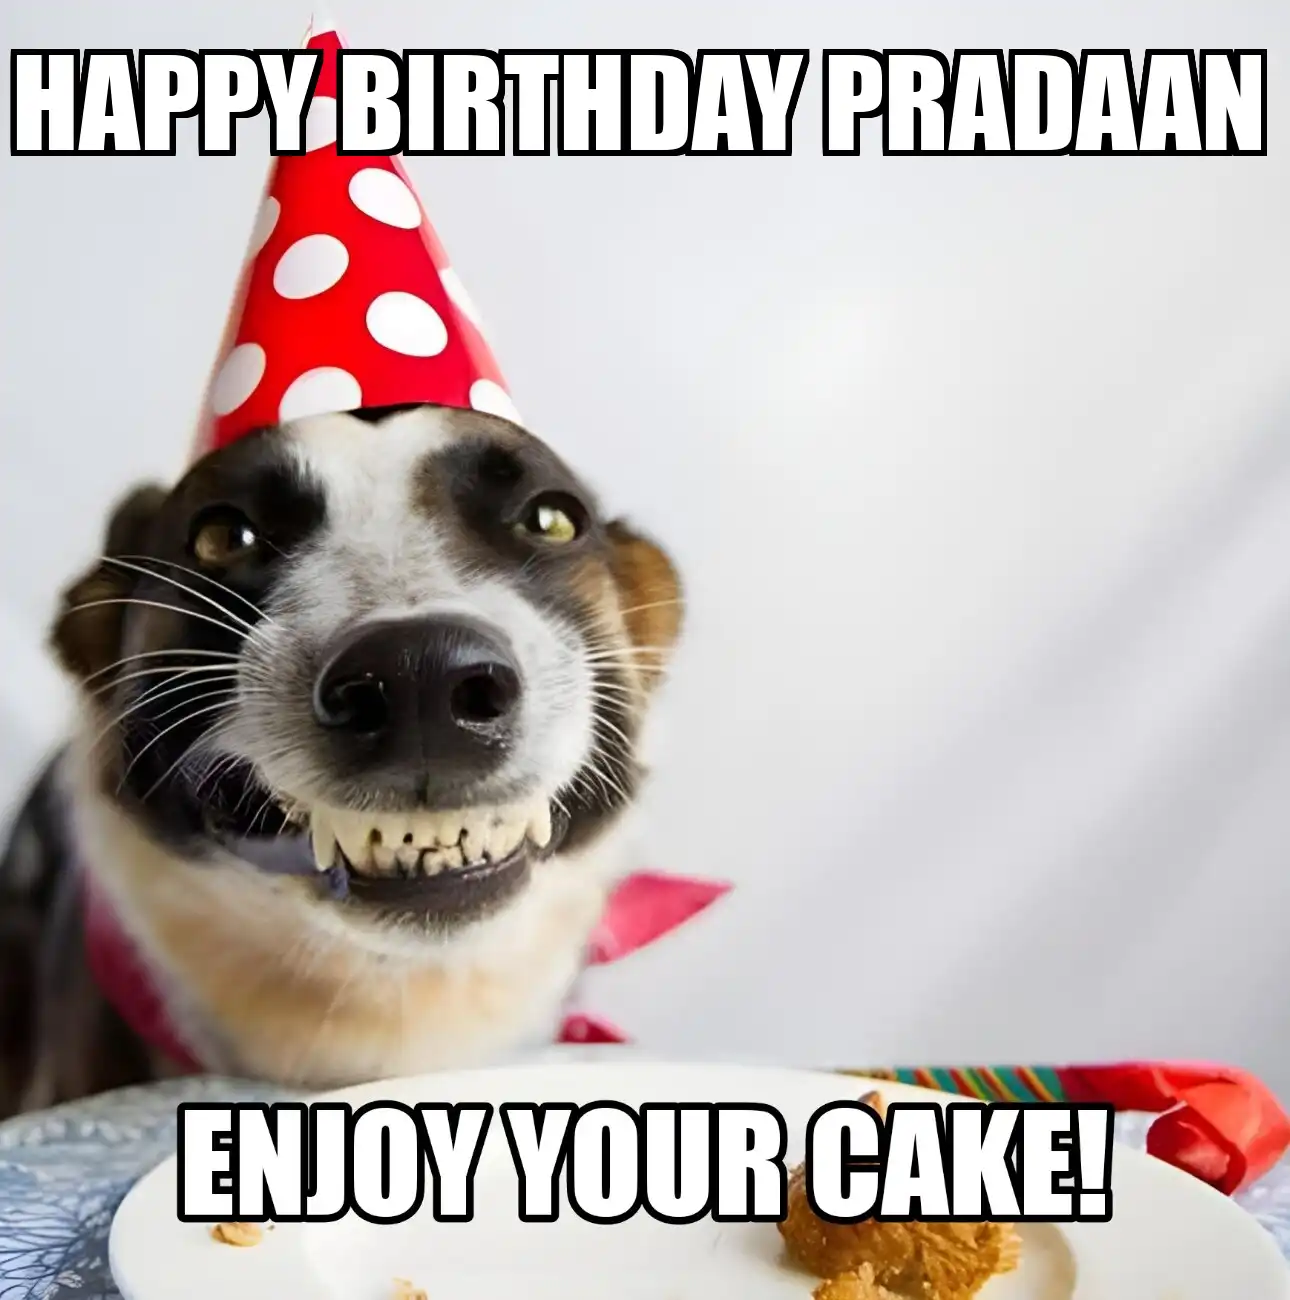 Happy Birthday Pradaan Enjoy Your Cake Dog Meme